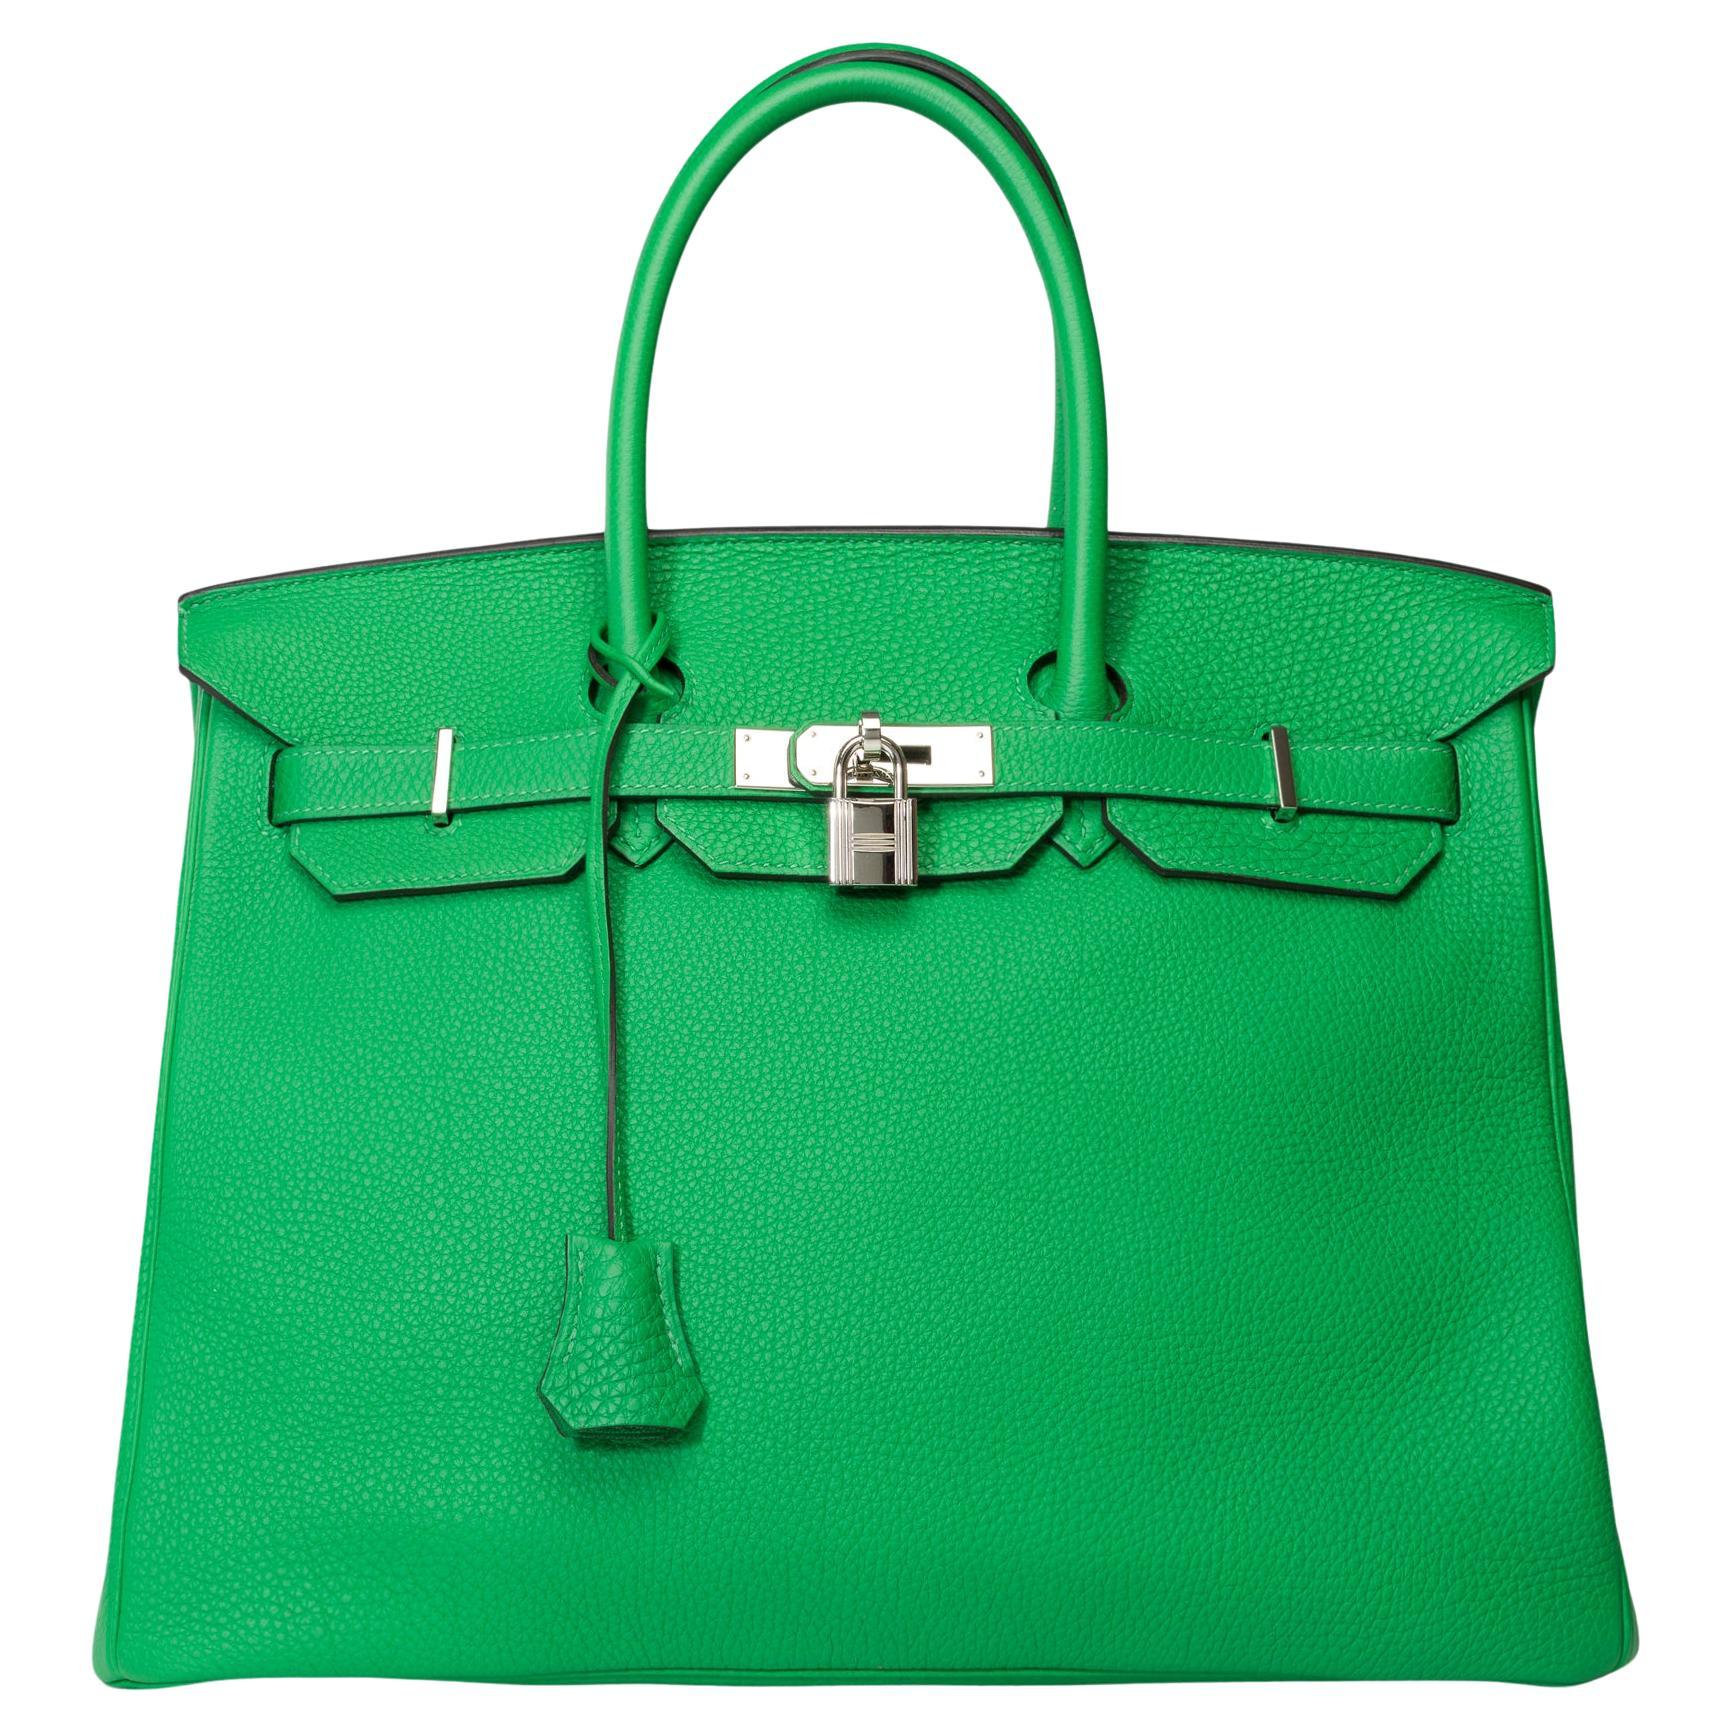 Fantastic Hermès Birkin 35 handbag in Green Bamboo Togo leather, SHW For Sale